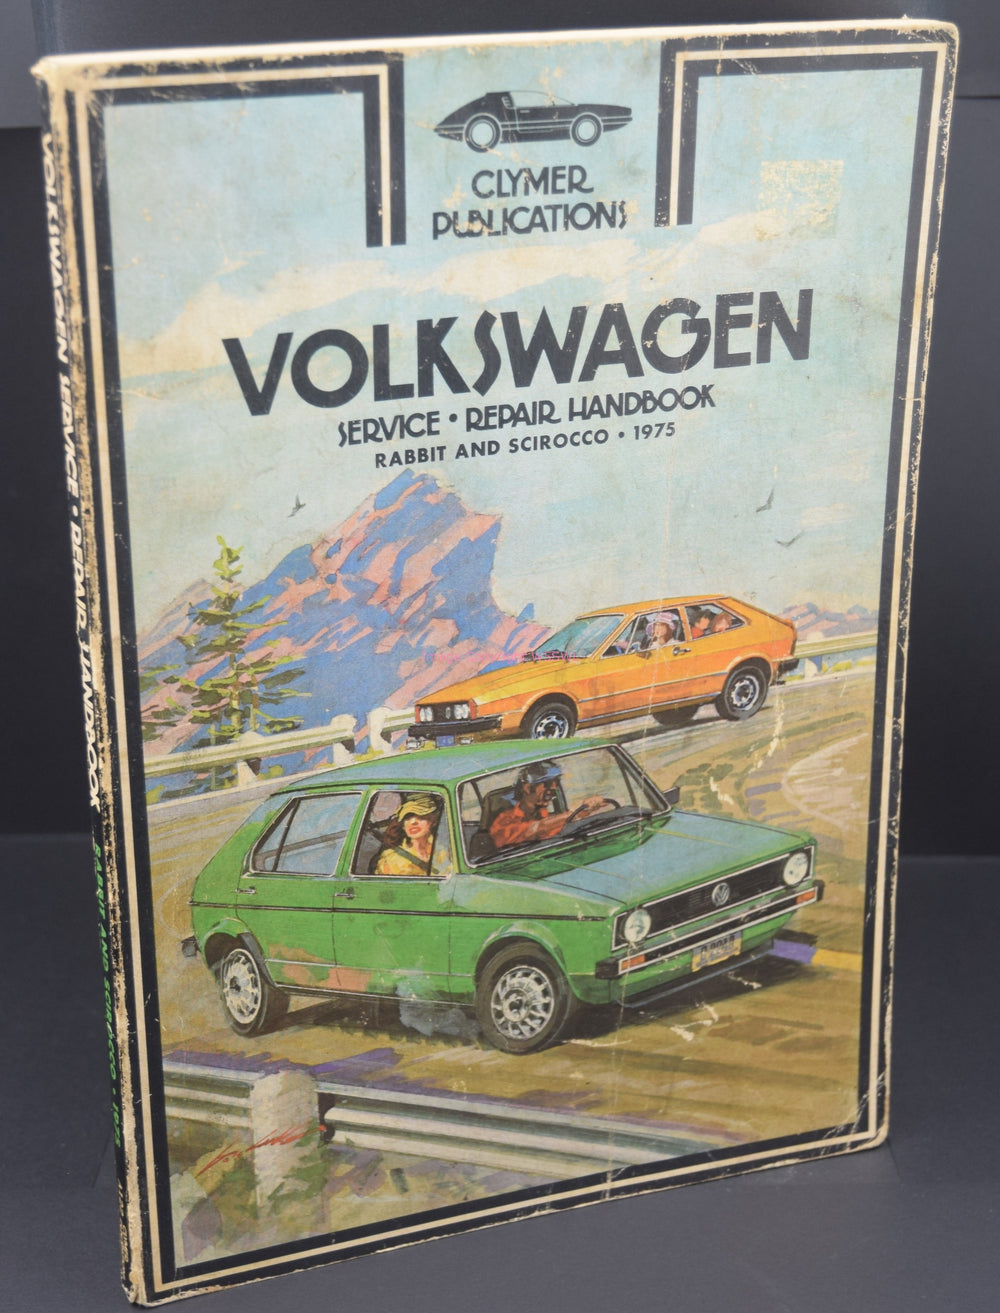 Volkswagen Rabbit Scirocco 1975 Service Repair Handbook 3rd Edition 1976 - Dave's Hobby Shop by W5SWL